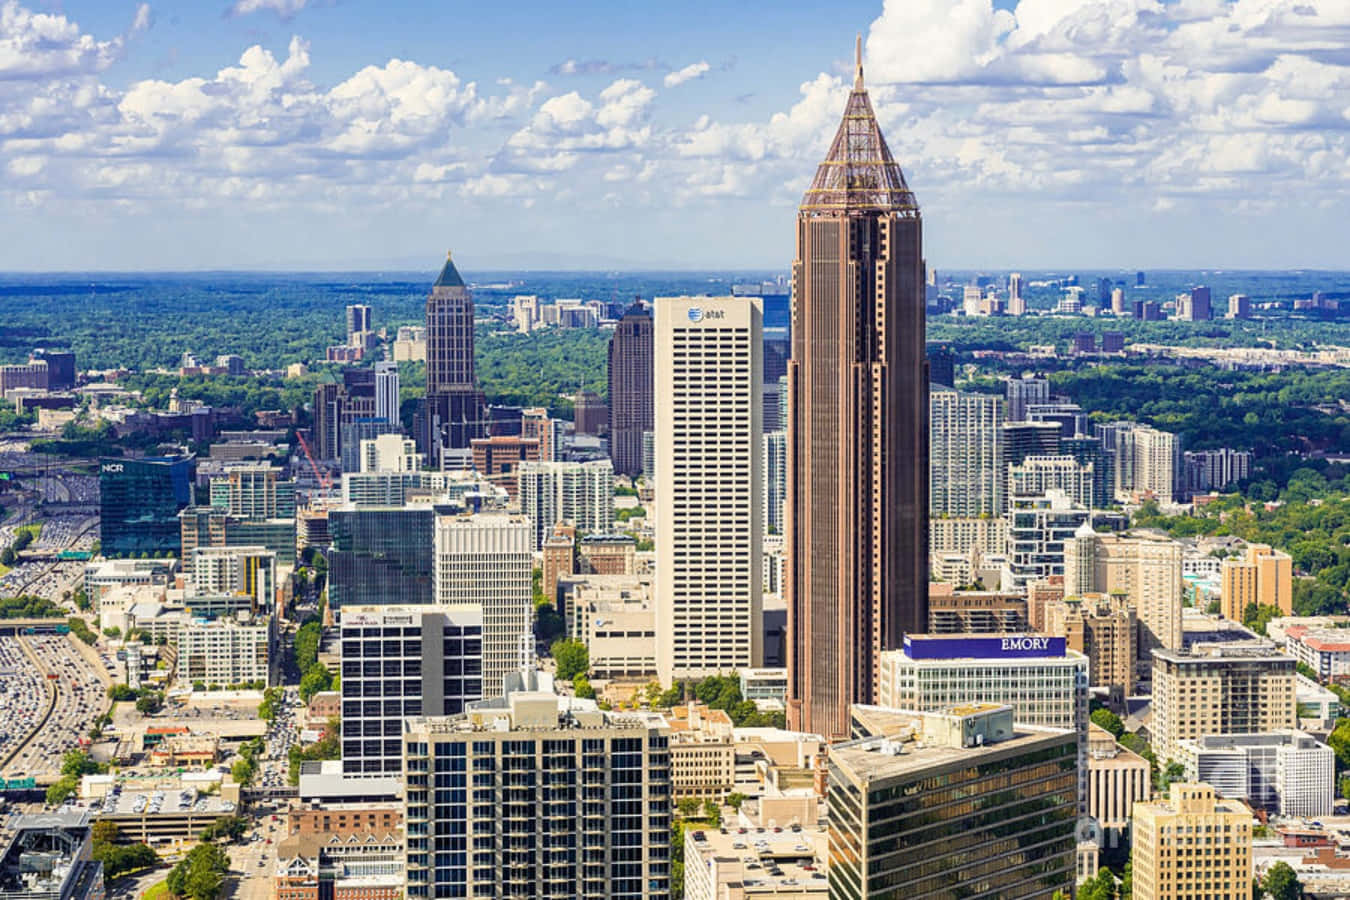 Enjoy a birds-eye view of Atlanta, Georgia